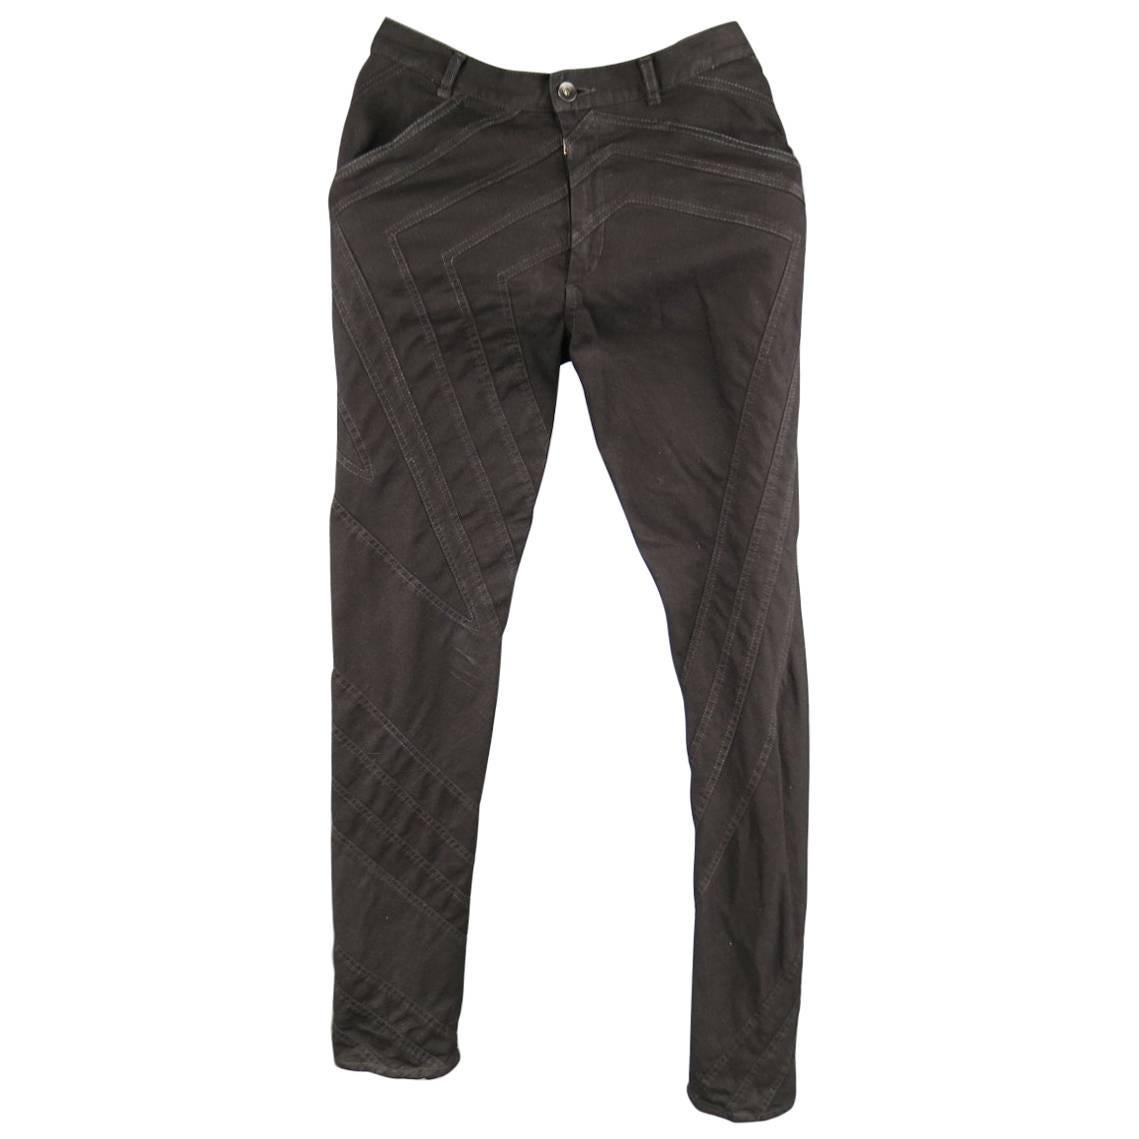 GARETH PUGH Jeans Size 28 Black Star Patchwork Denim Skinny Pants